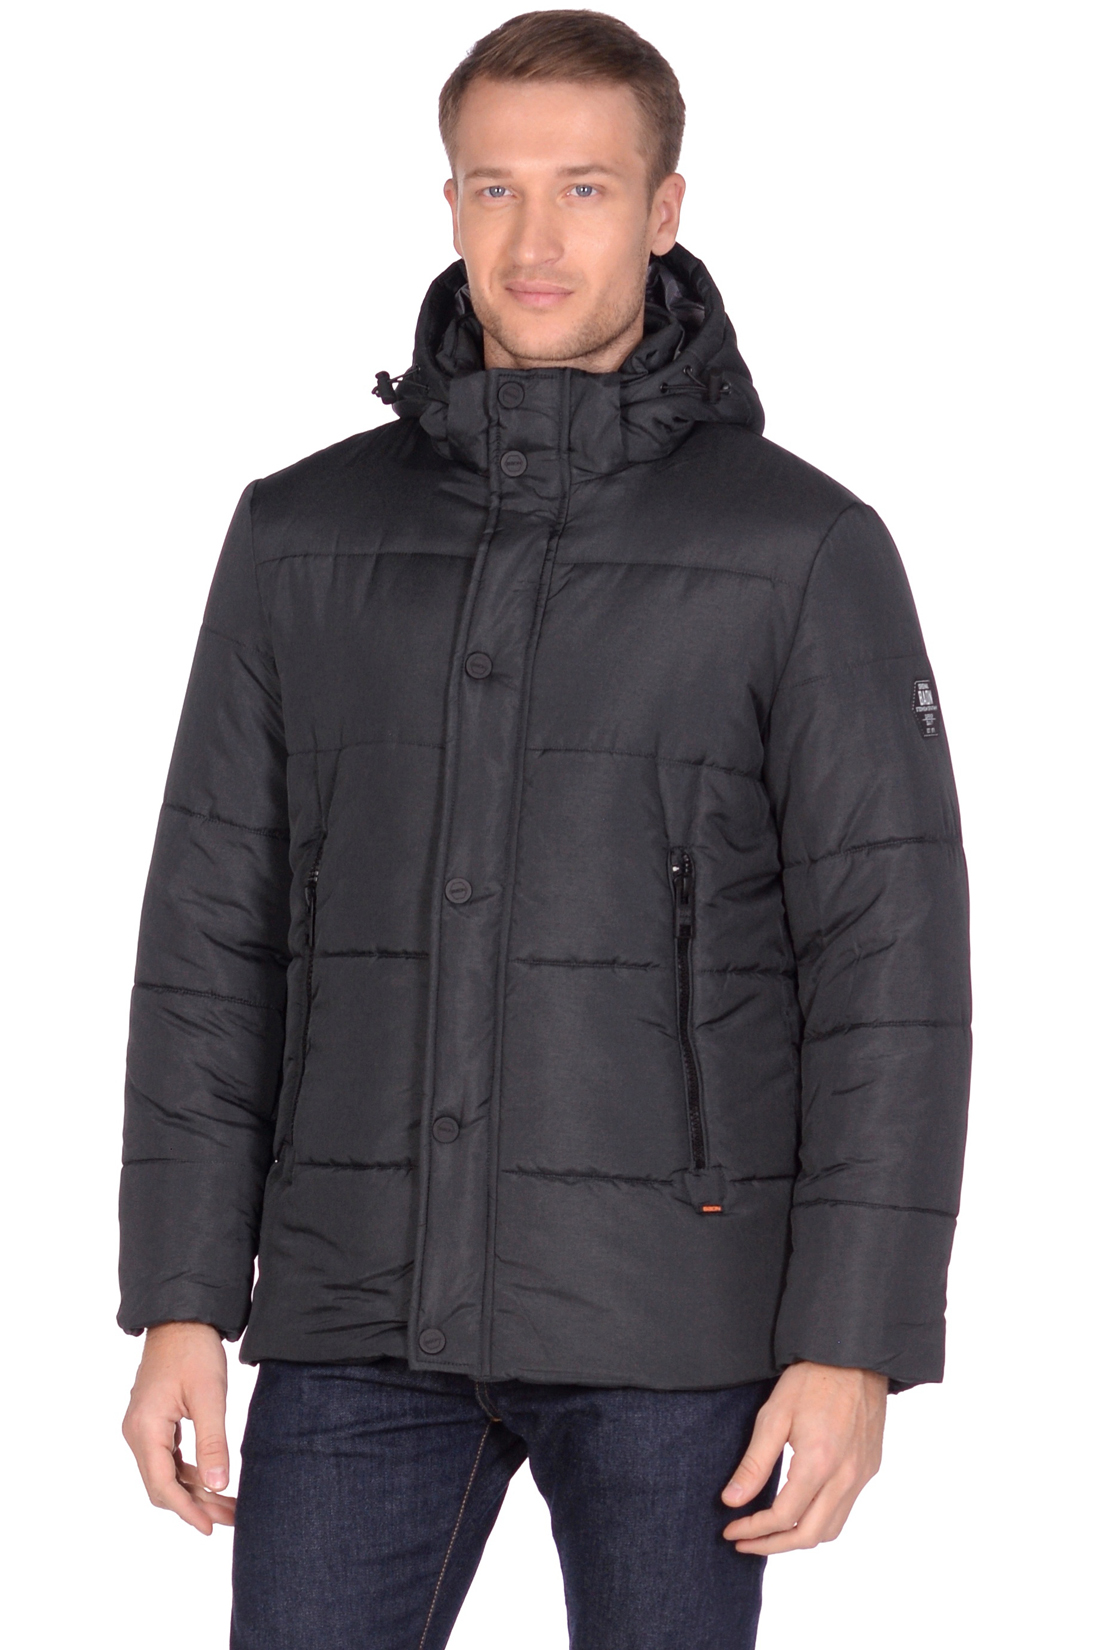 Куртка в спортивном стиле (арт. baon B539524), размер XXL, цвет серый